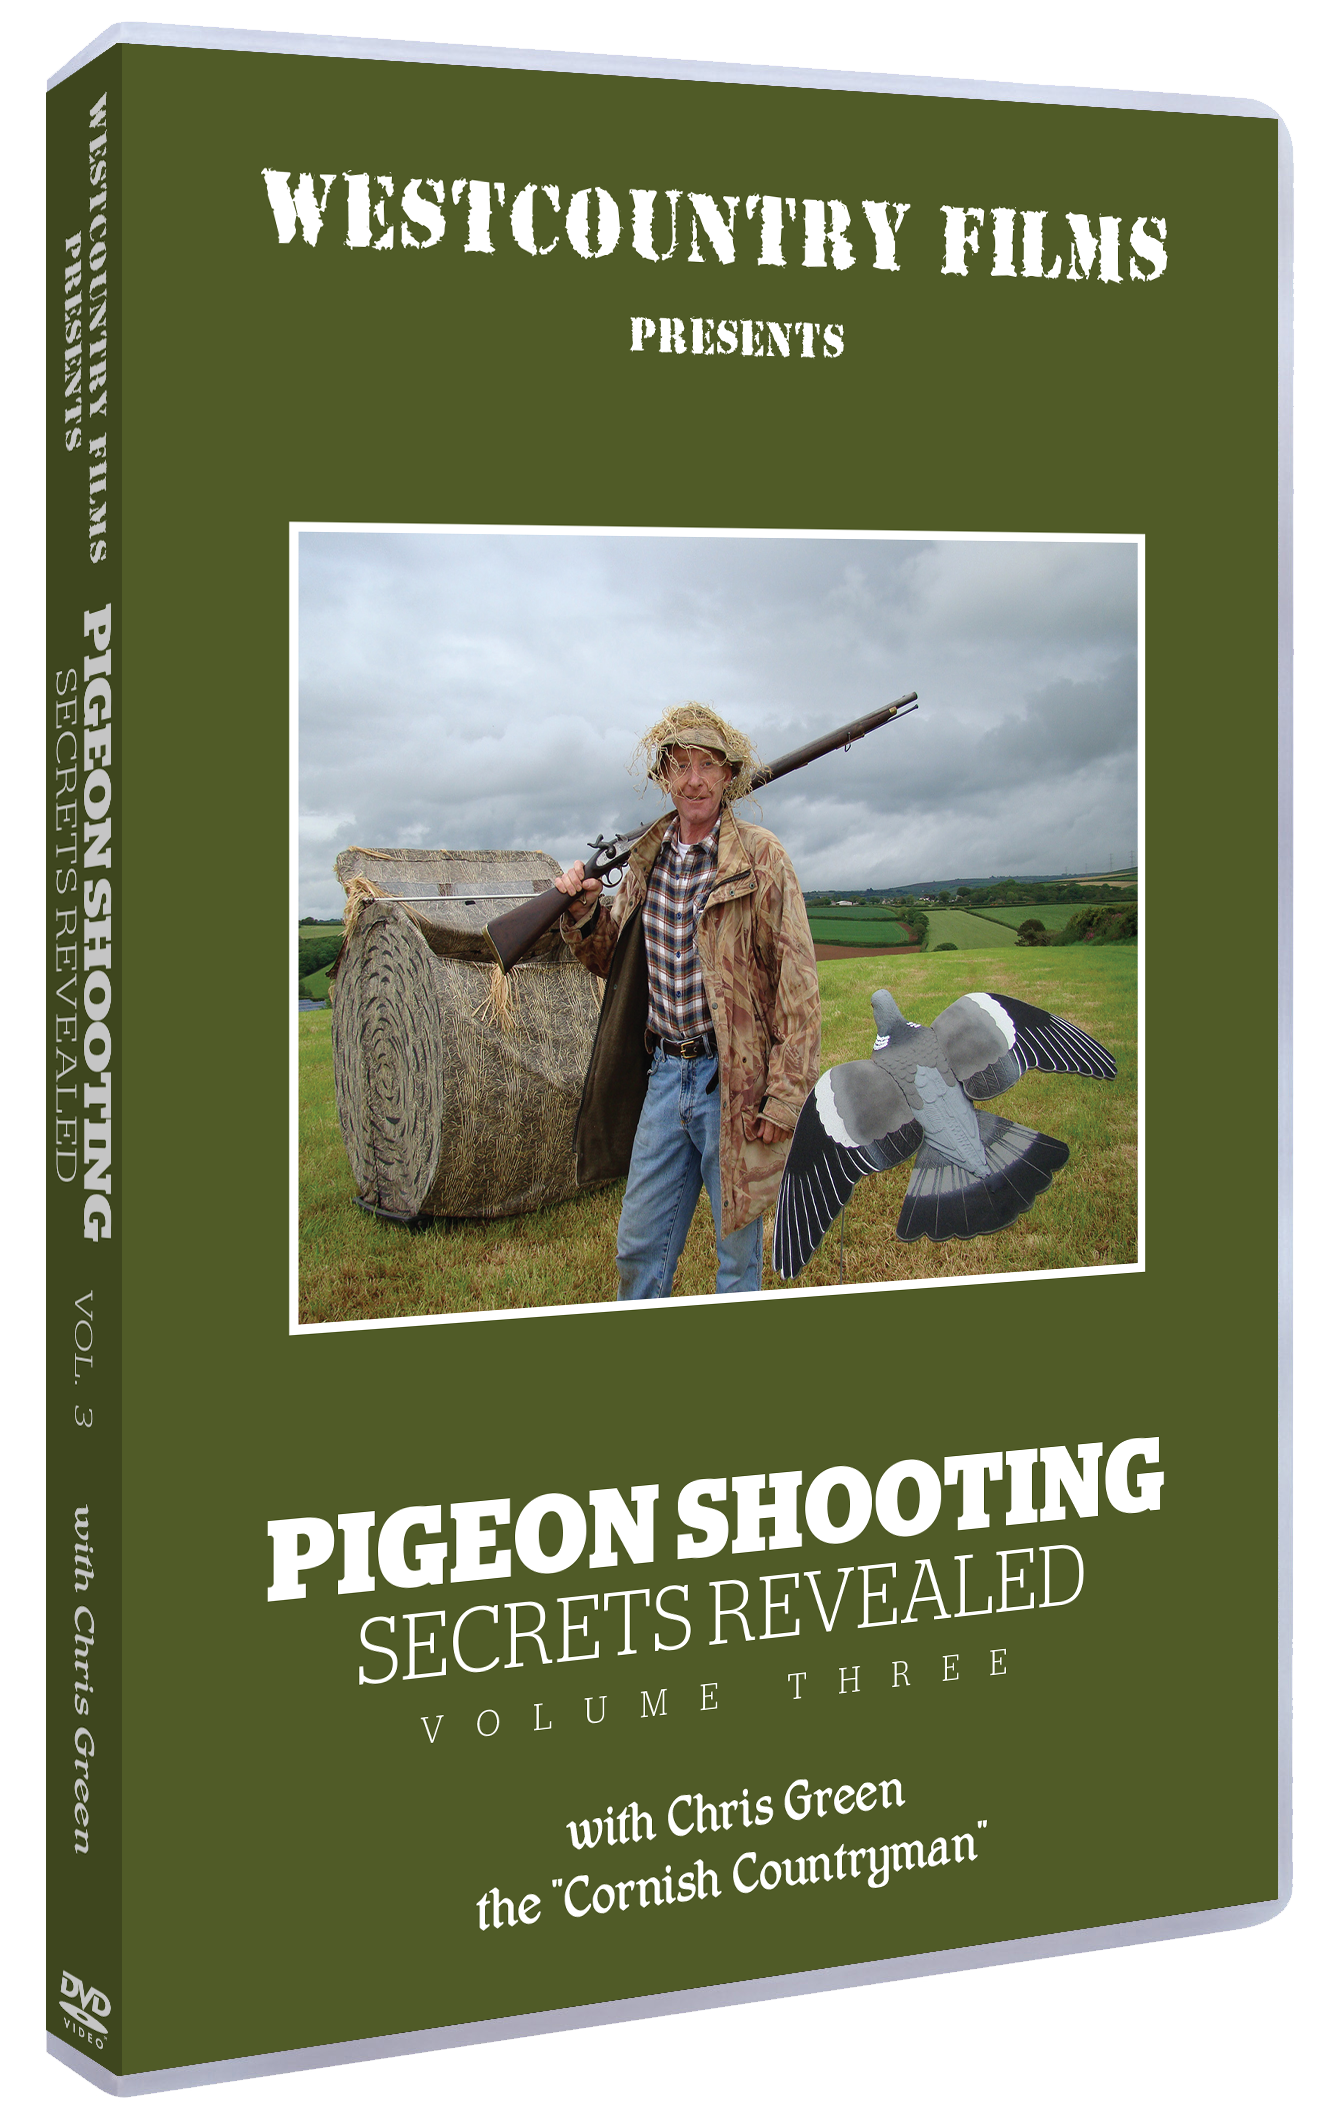 PIGEON SHOOTING SECRETS REVEALED VOLUME THREE